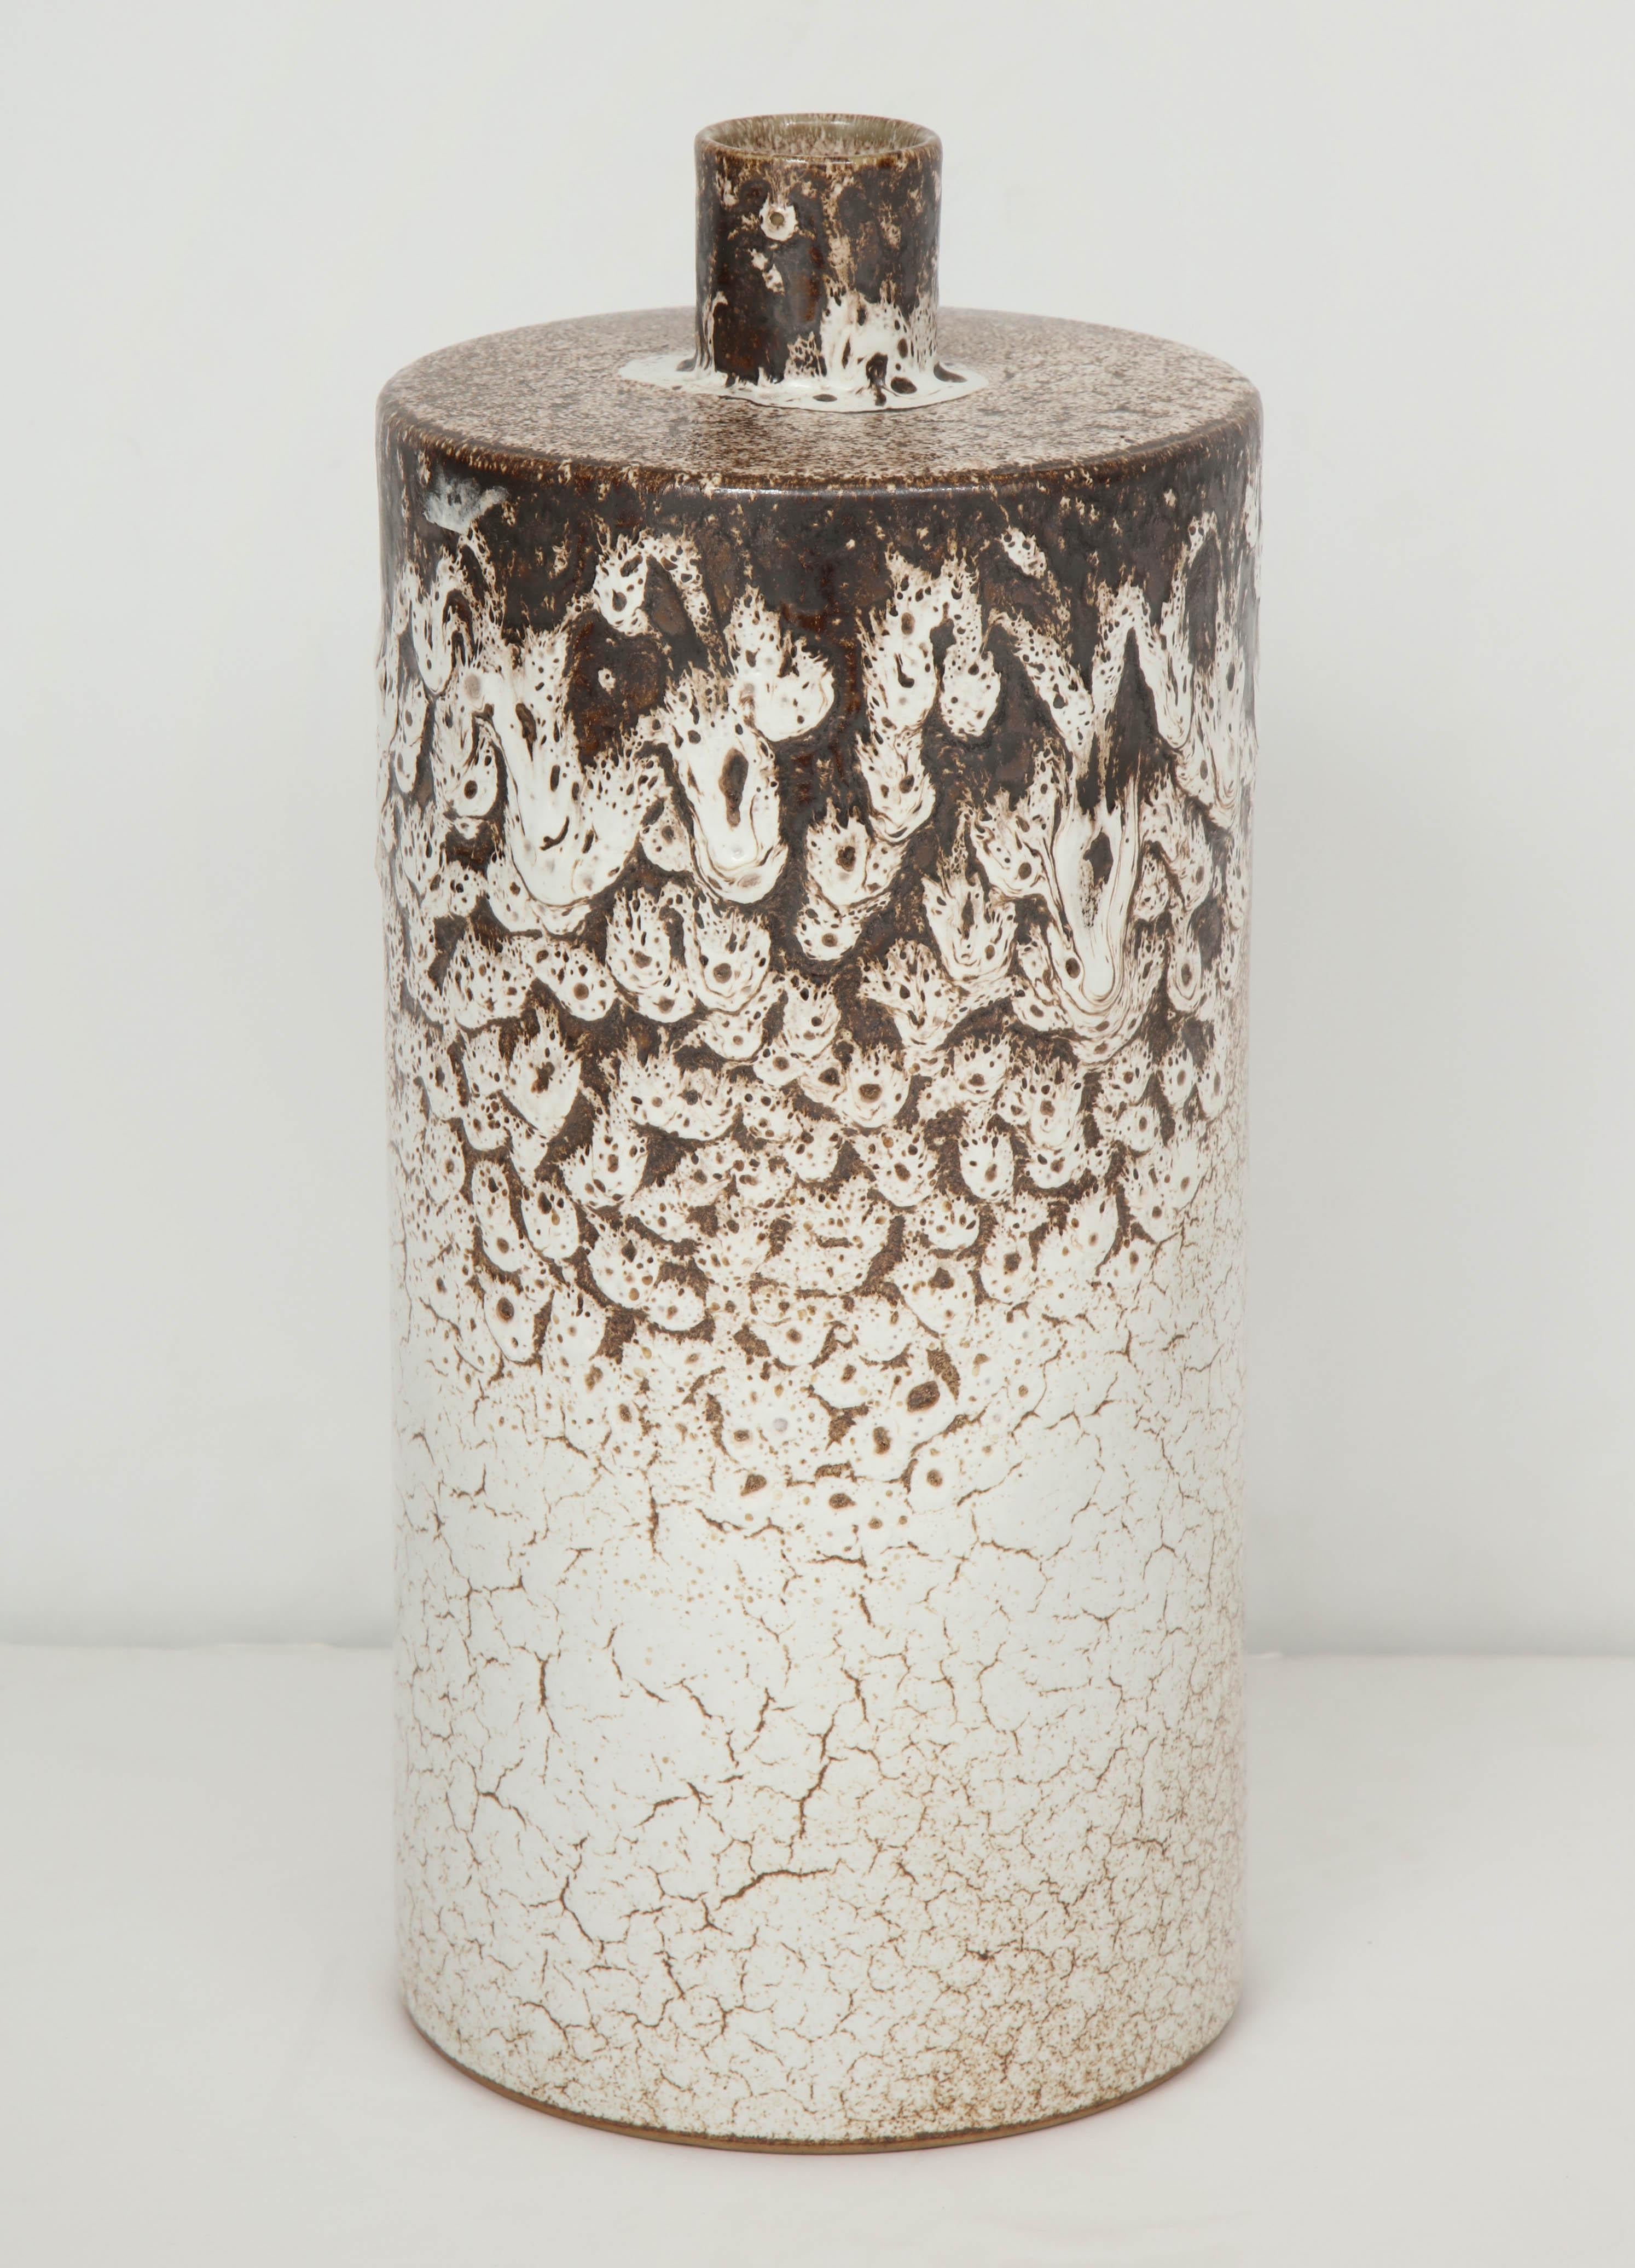 1960s large West German vase with a wonderful fat lava glazed finish.